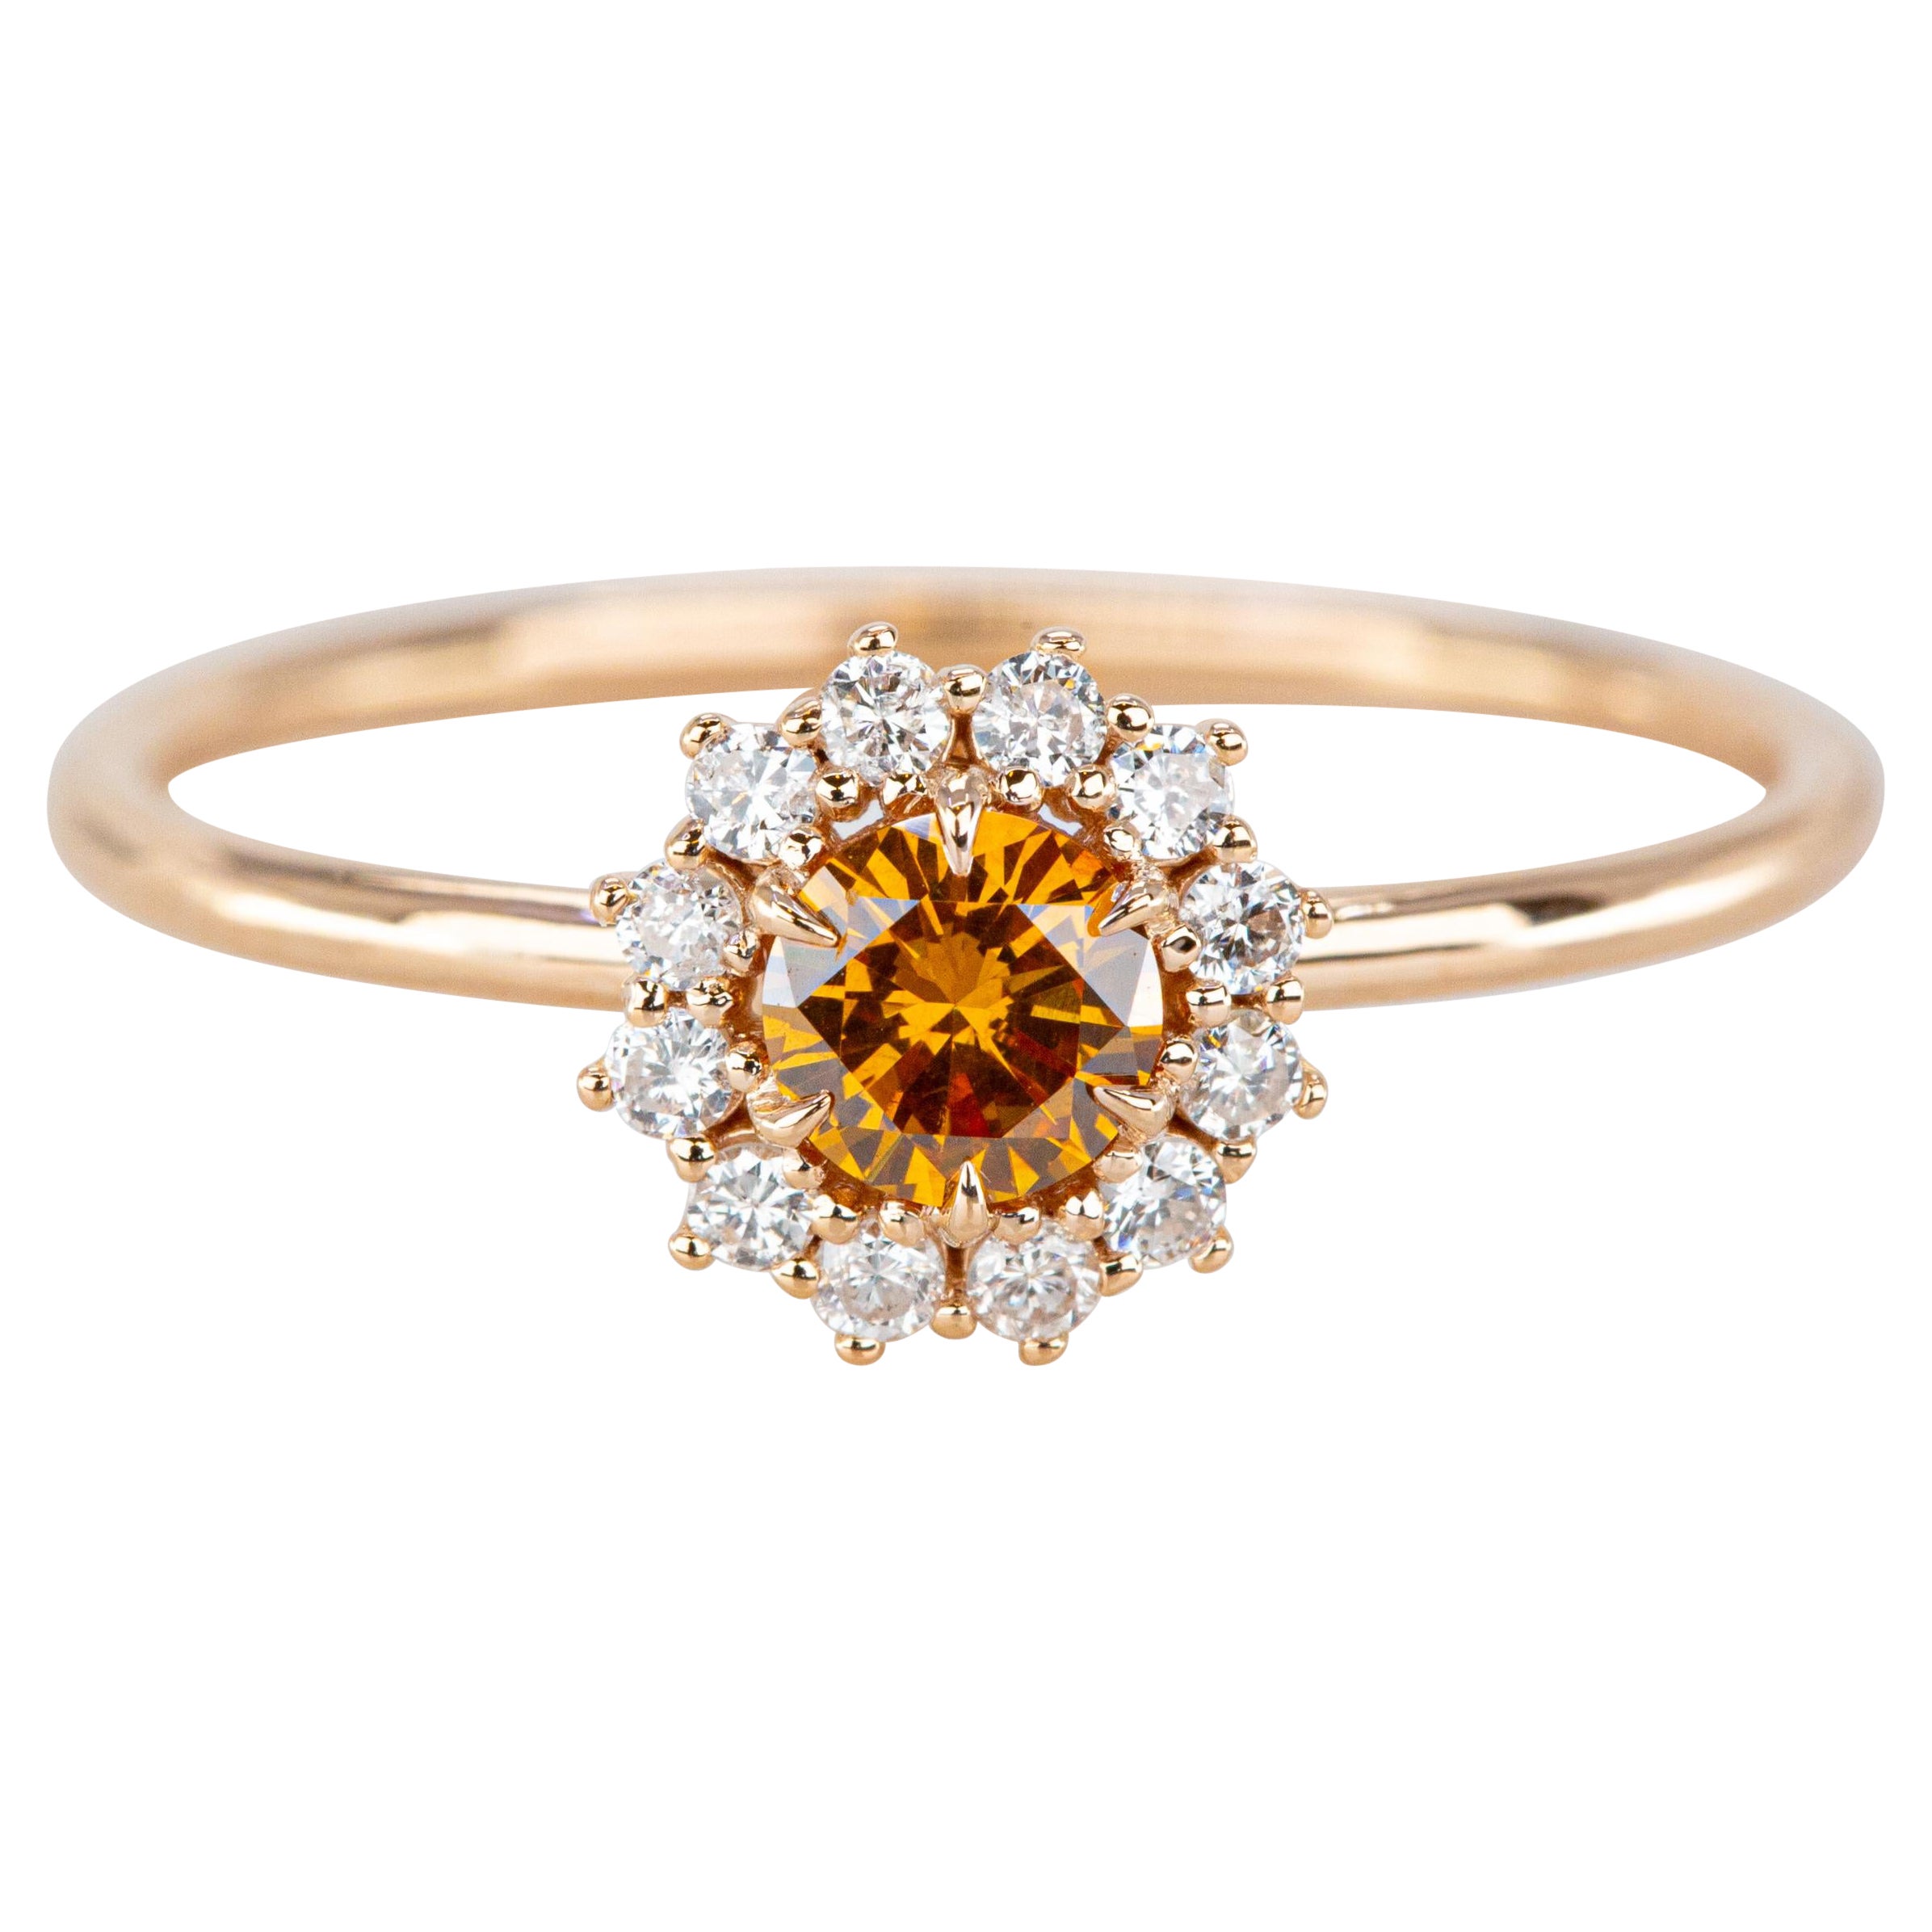 GIA 0.24 Ct. Fancy Deep Yellow-Orange Diamond 14K Gold Solitaire Ring